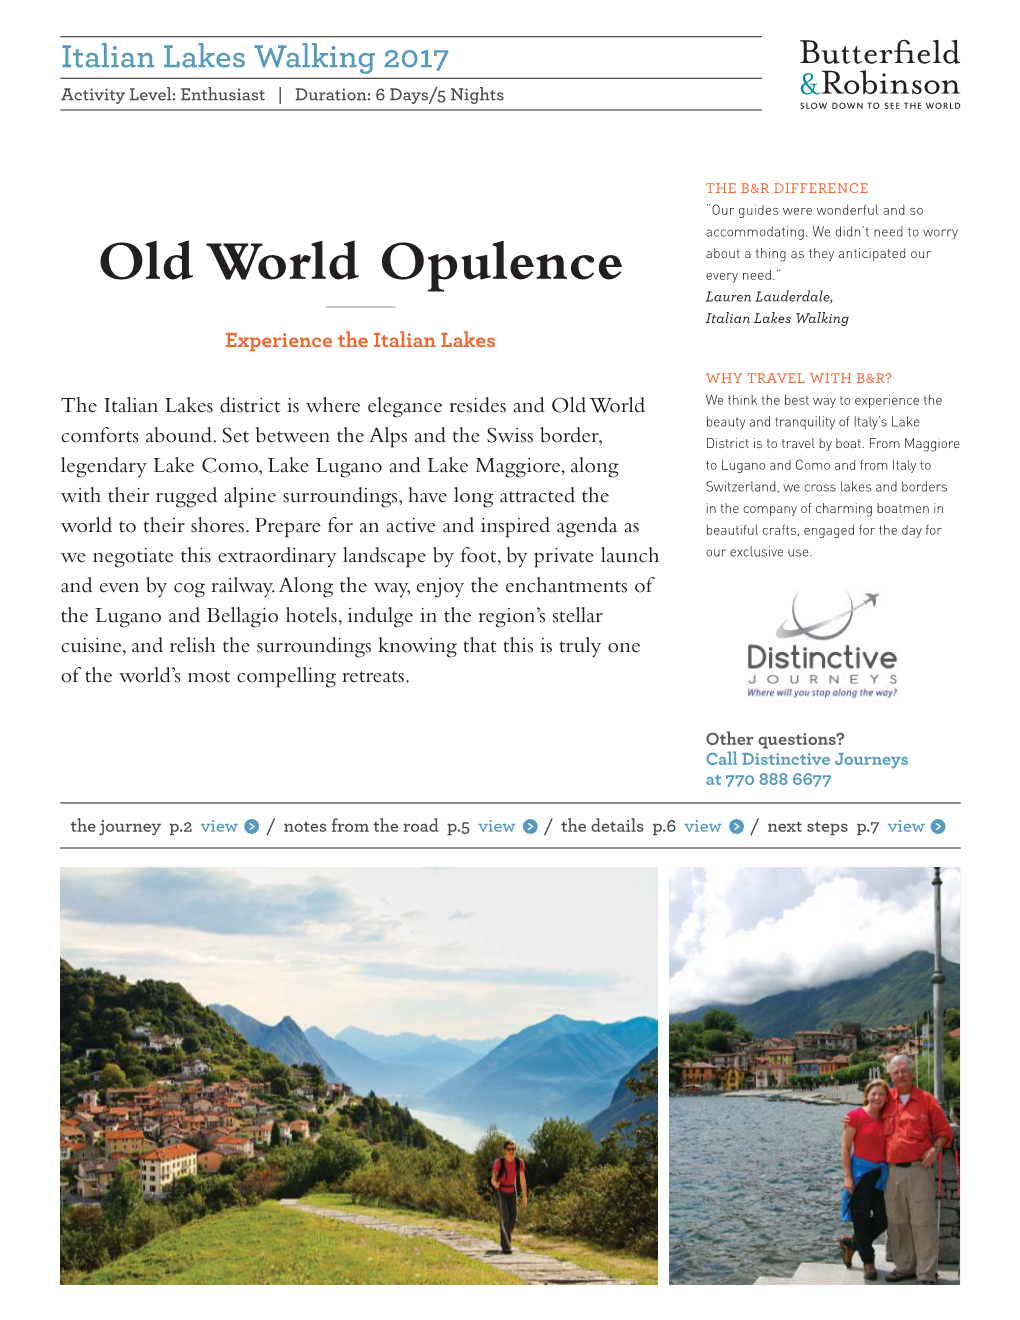 Old World Opulence Every Need.” ______Lauren Lauderdale, Italian Lakes Walking Experience the Italian Lakes